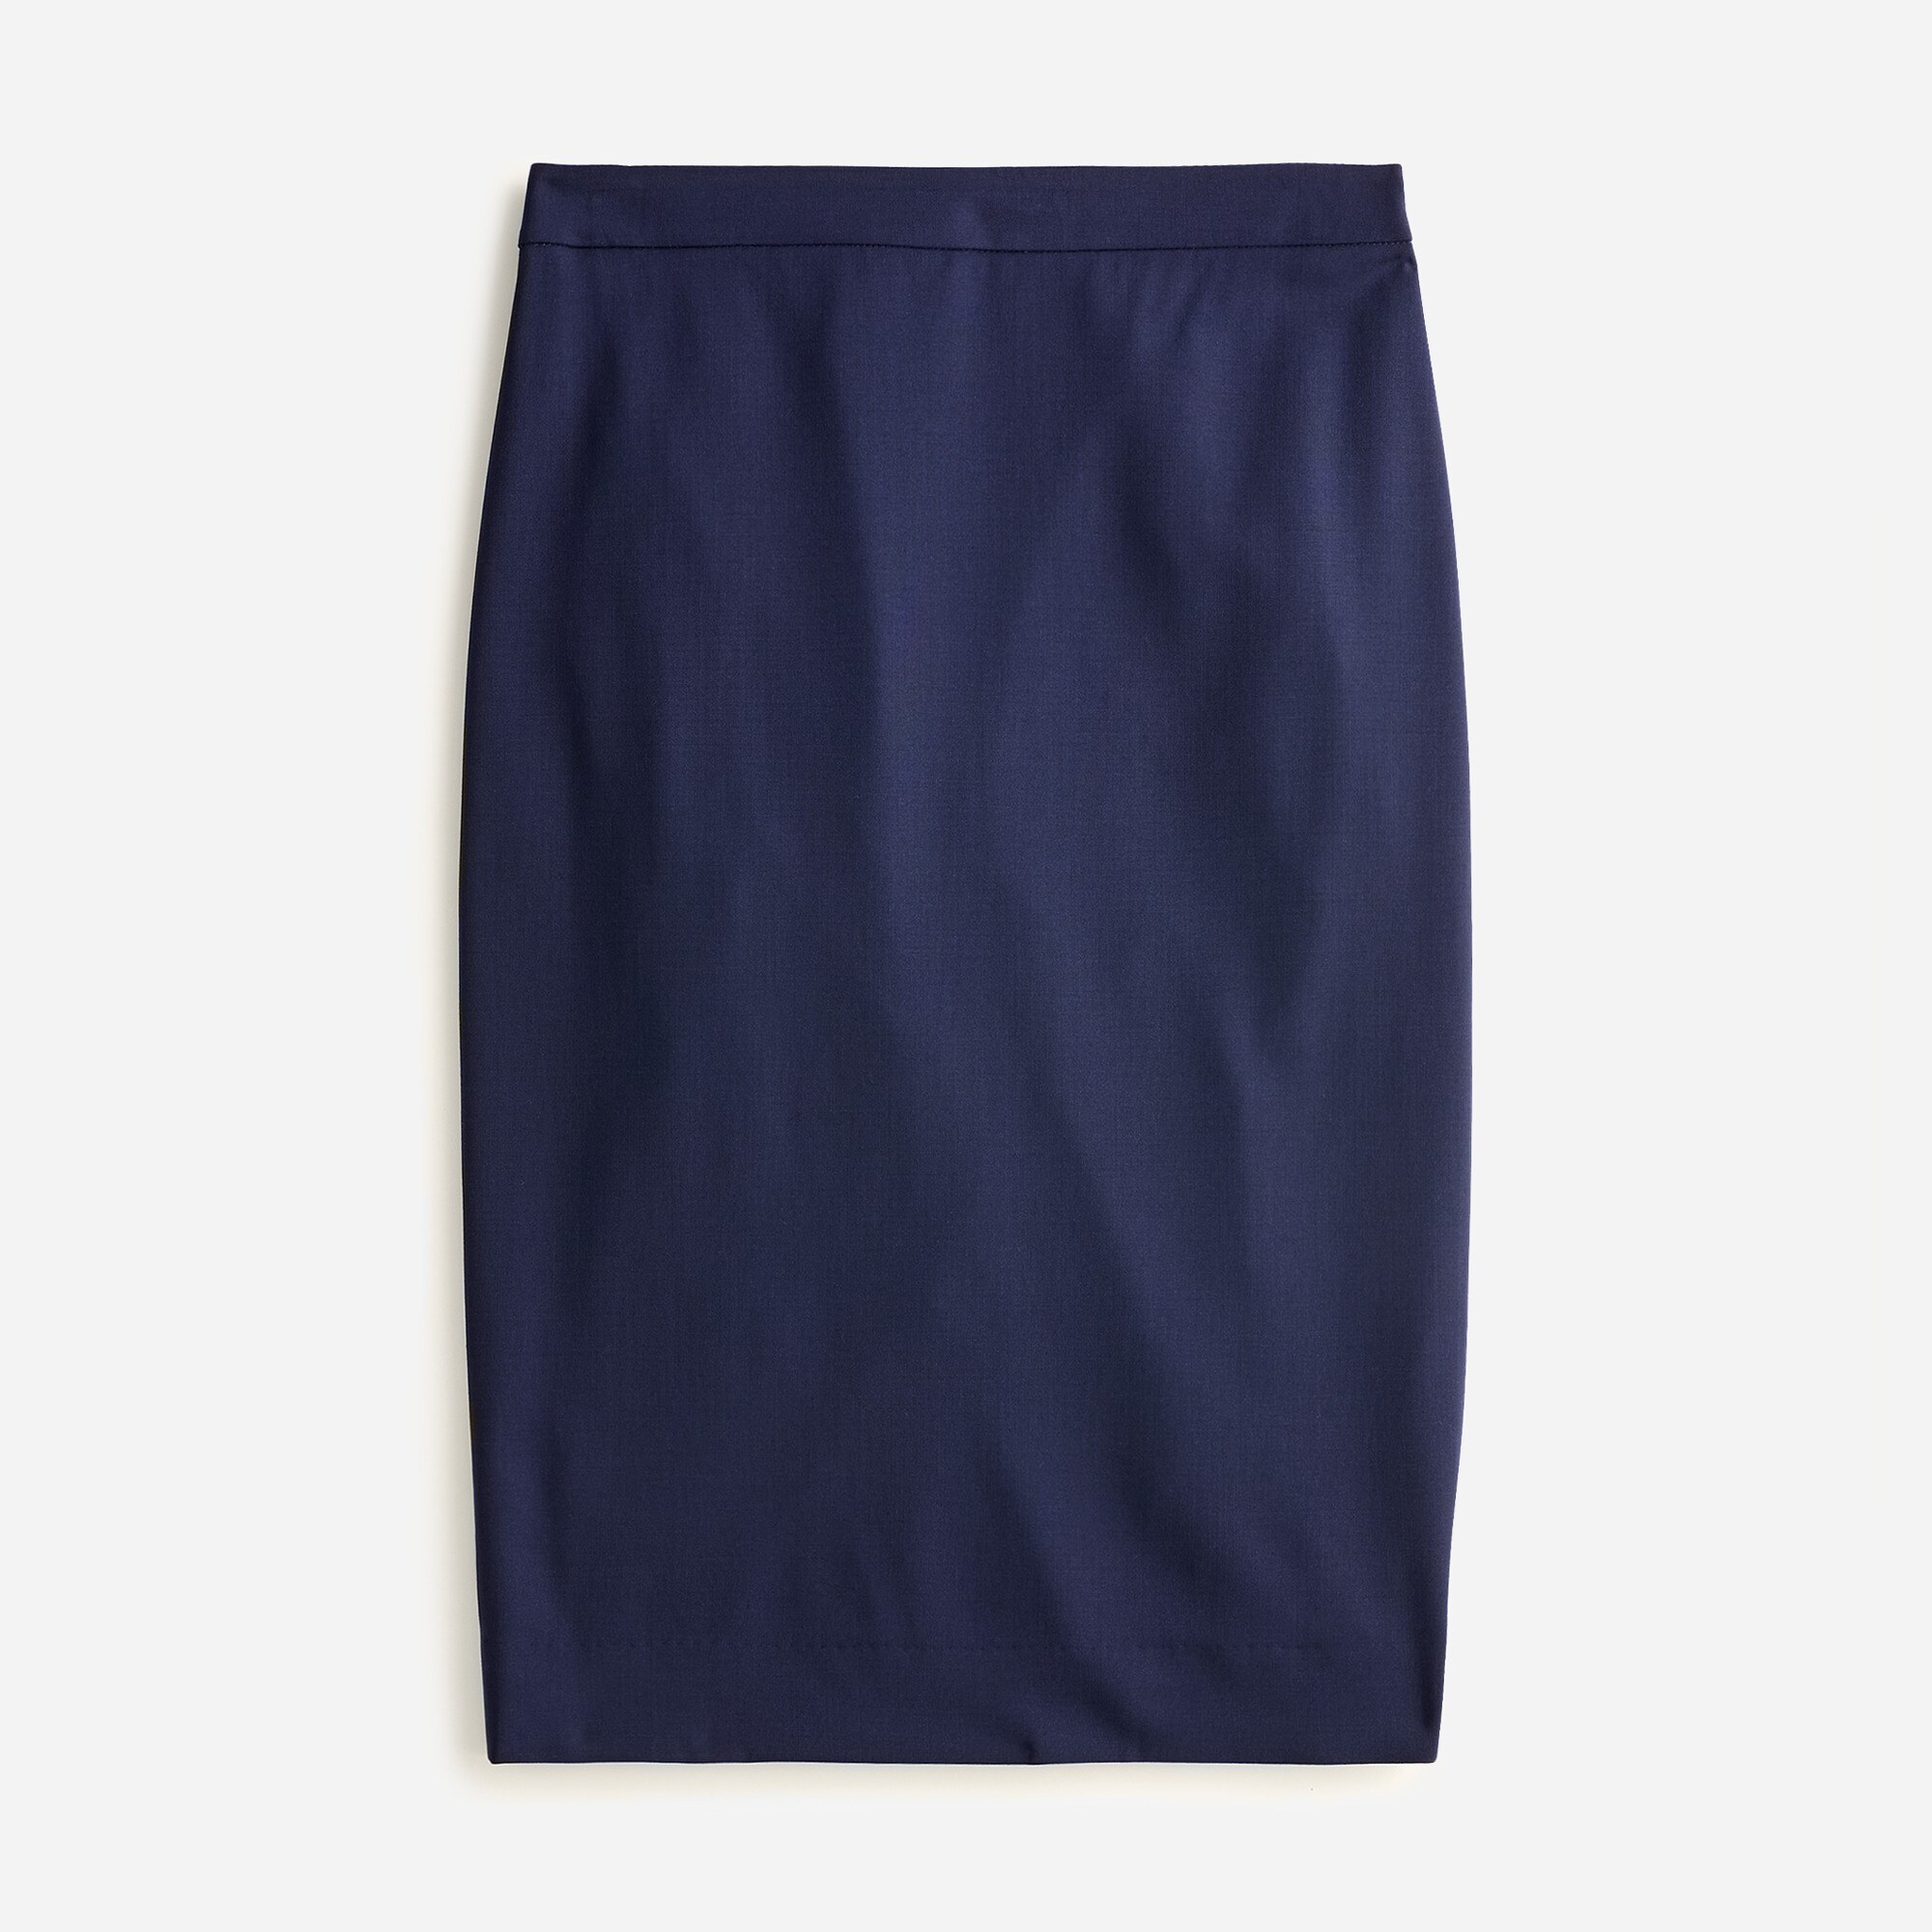  No. 2 Pencil&reg; skirt in Italian stretch wool